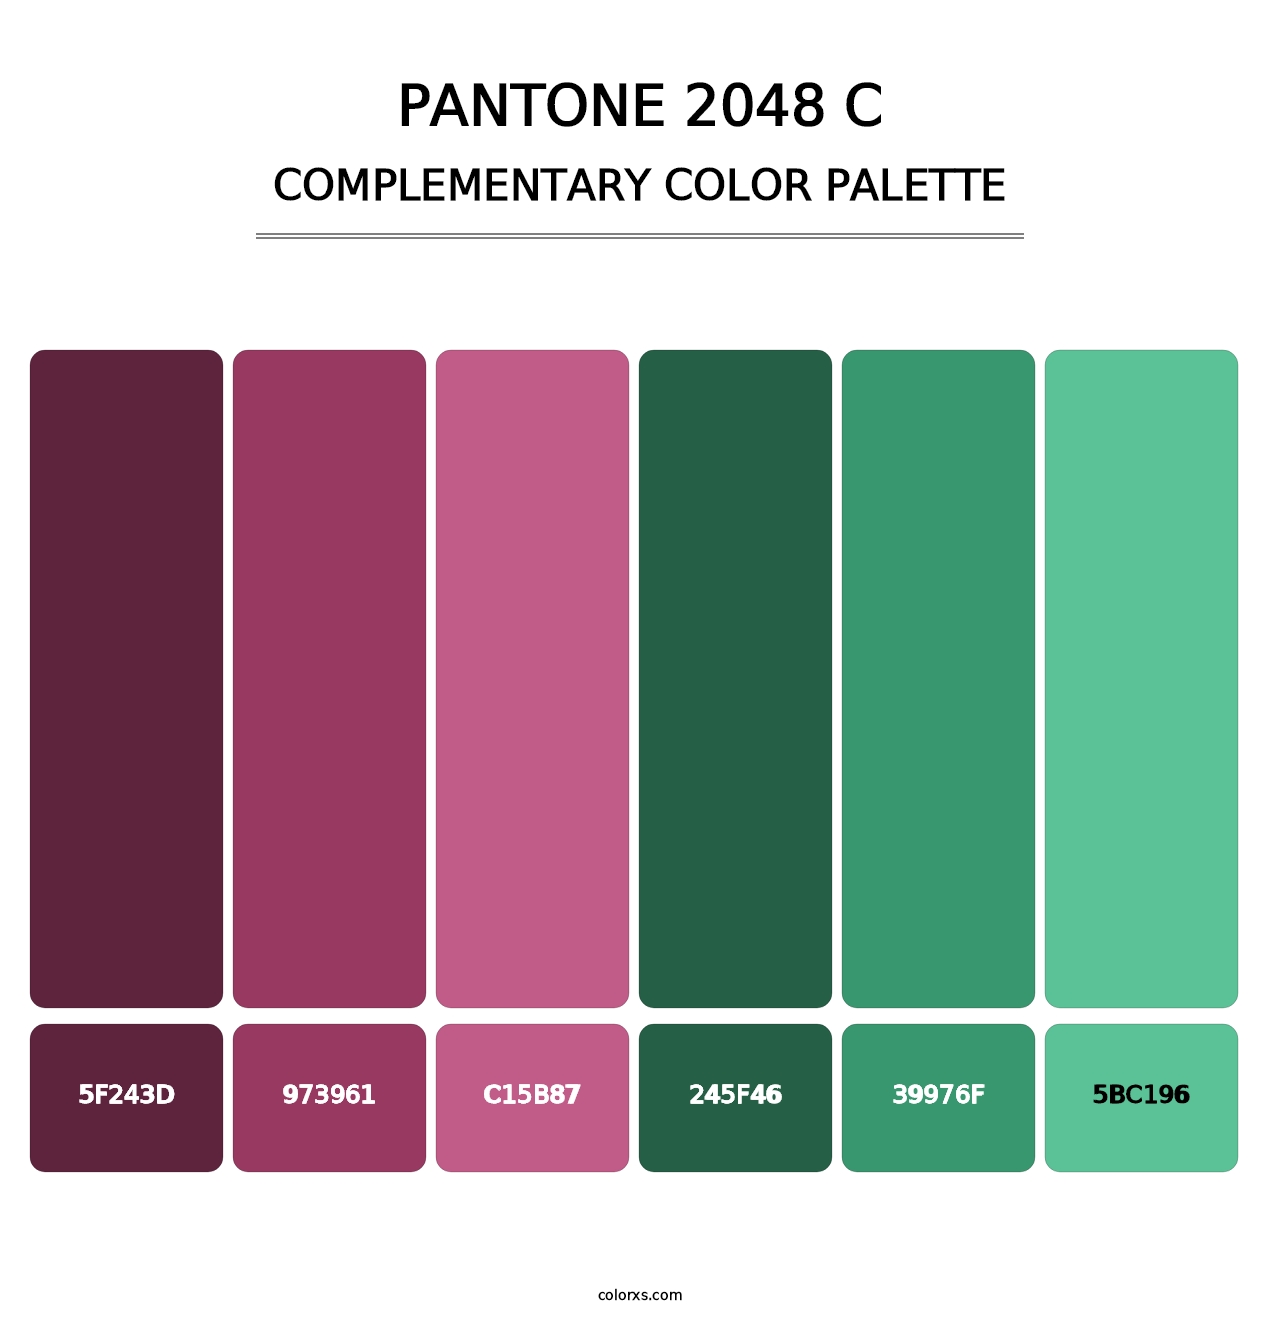 PANTONE 2048 C - Complementary Color Palette